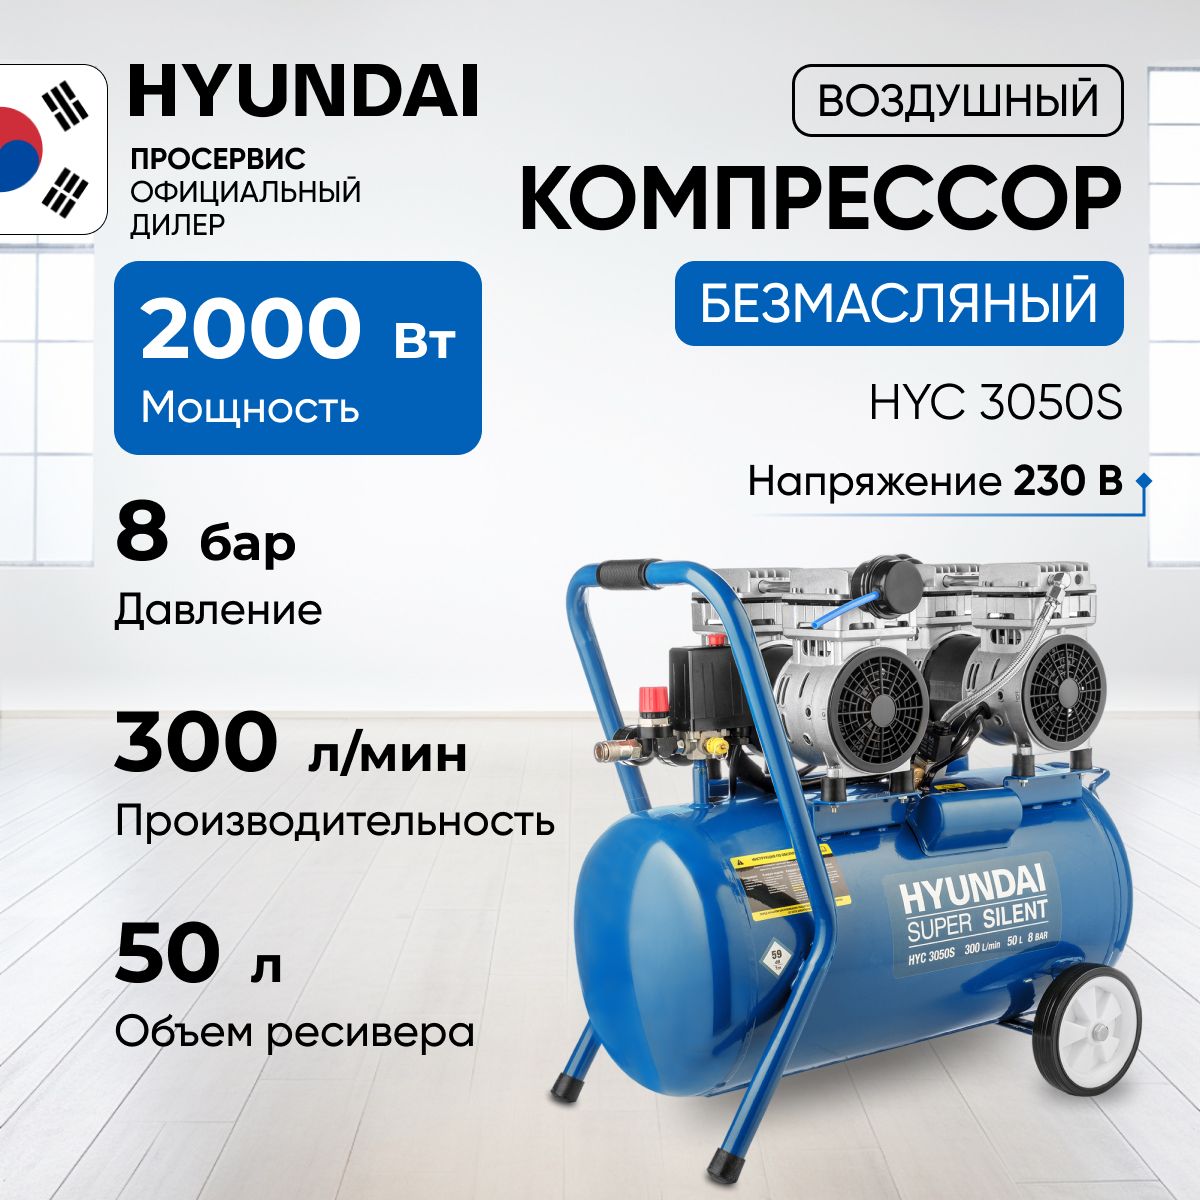 Компрессор hyundai hyc 3050s